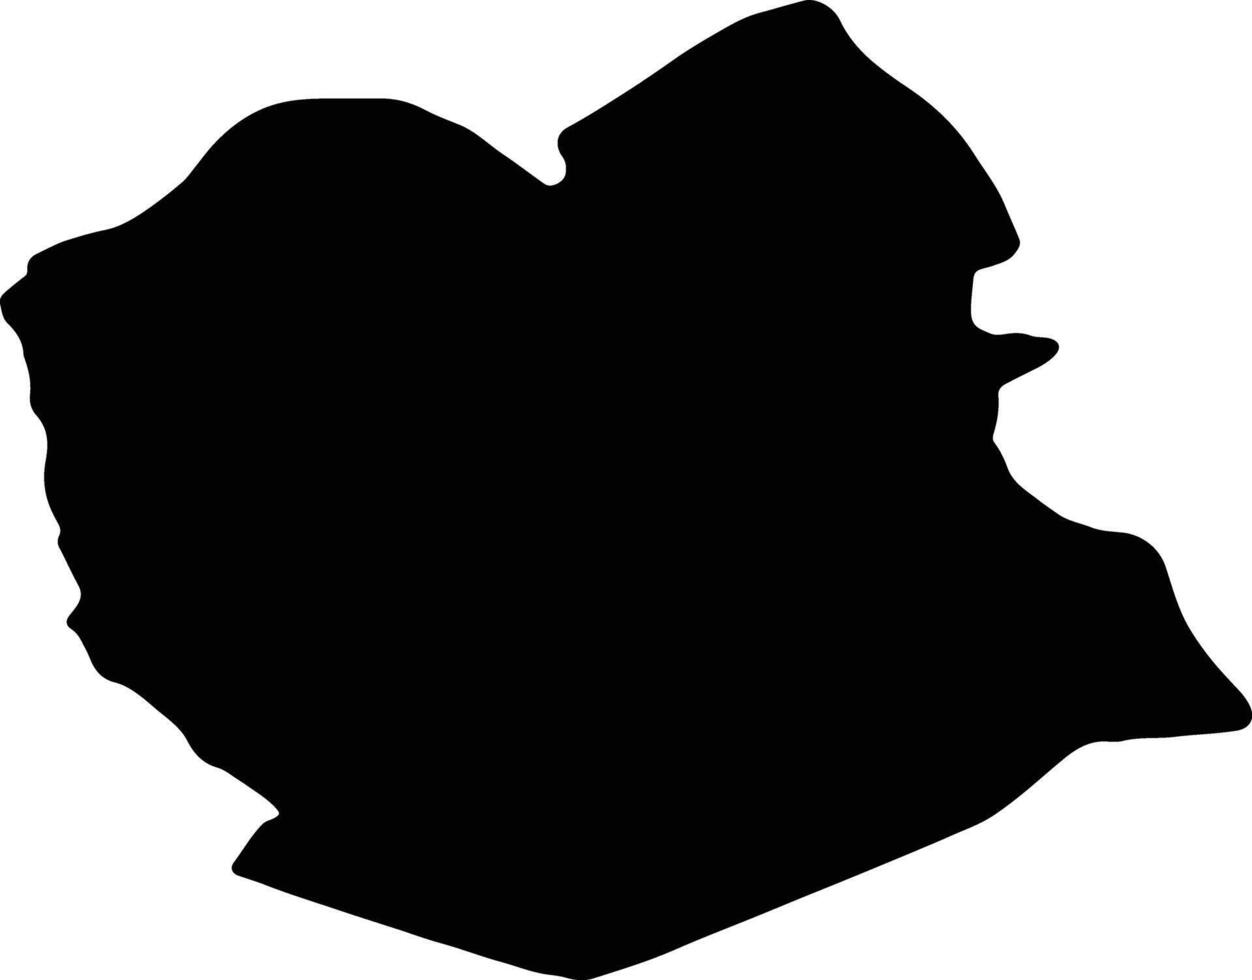 oruro Bolivie silhouette carte vecteur